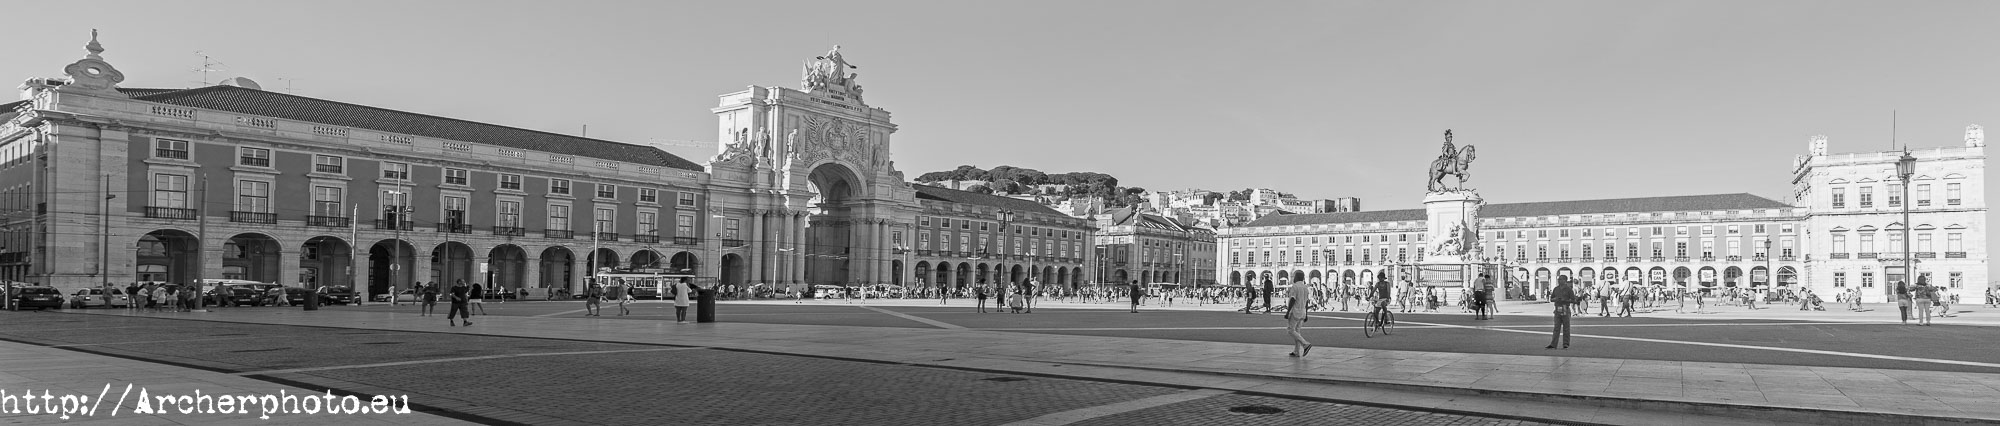 Praça do Comércio, Lisbon, Portugal, by Archerphoto, professional photographer